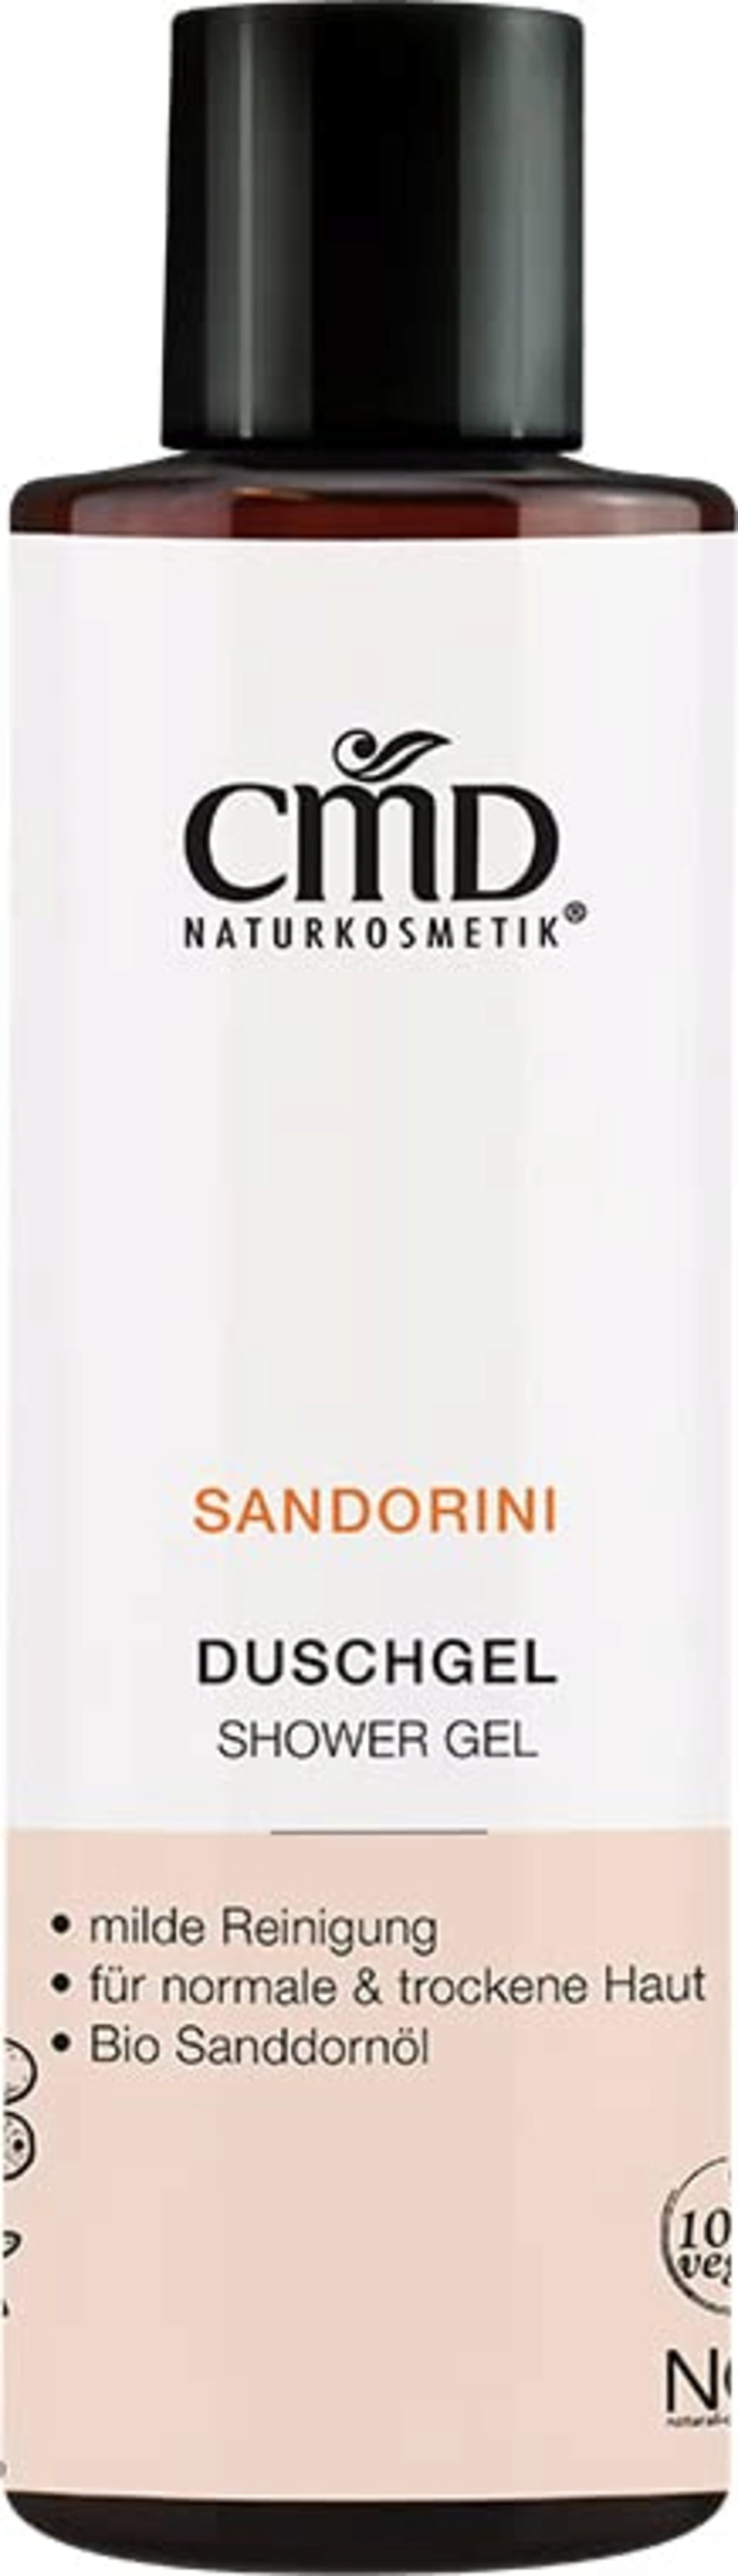 CMD Naturkosmetik Sandorini Duschgel - 200 ml